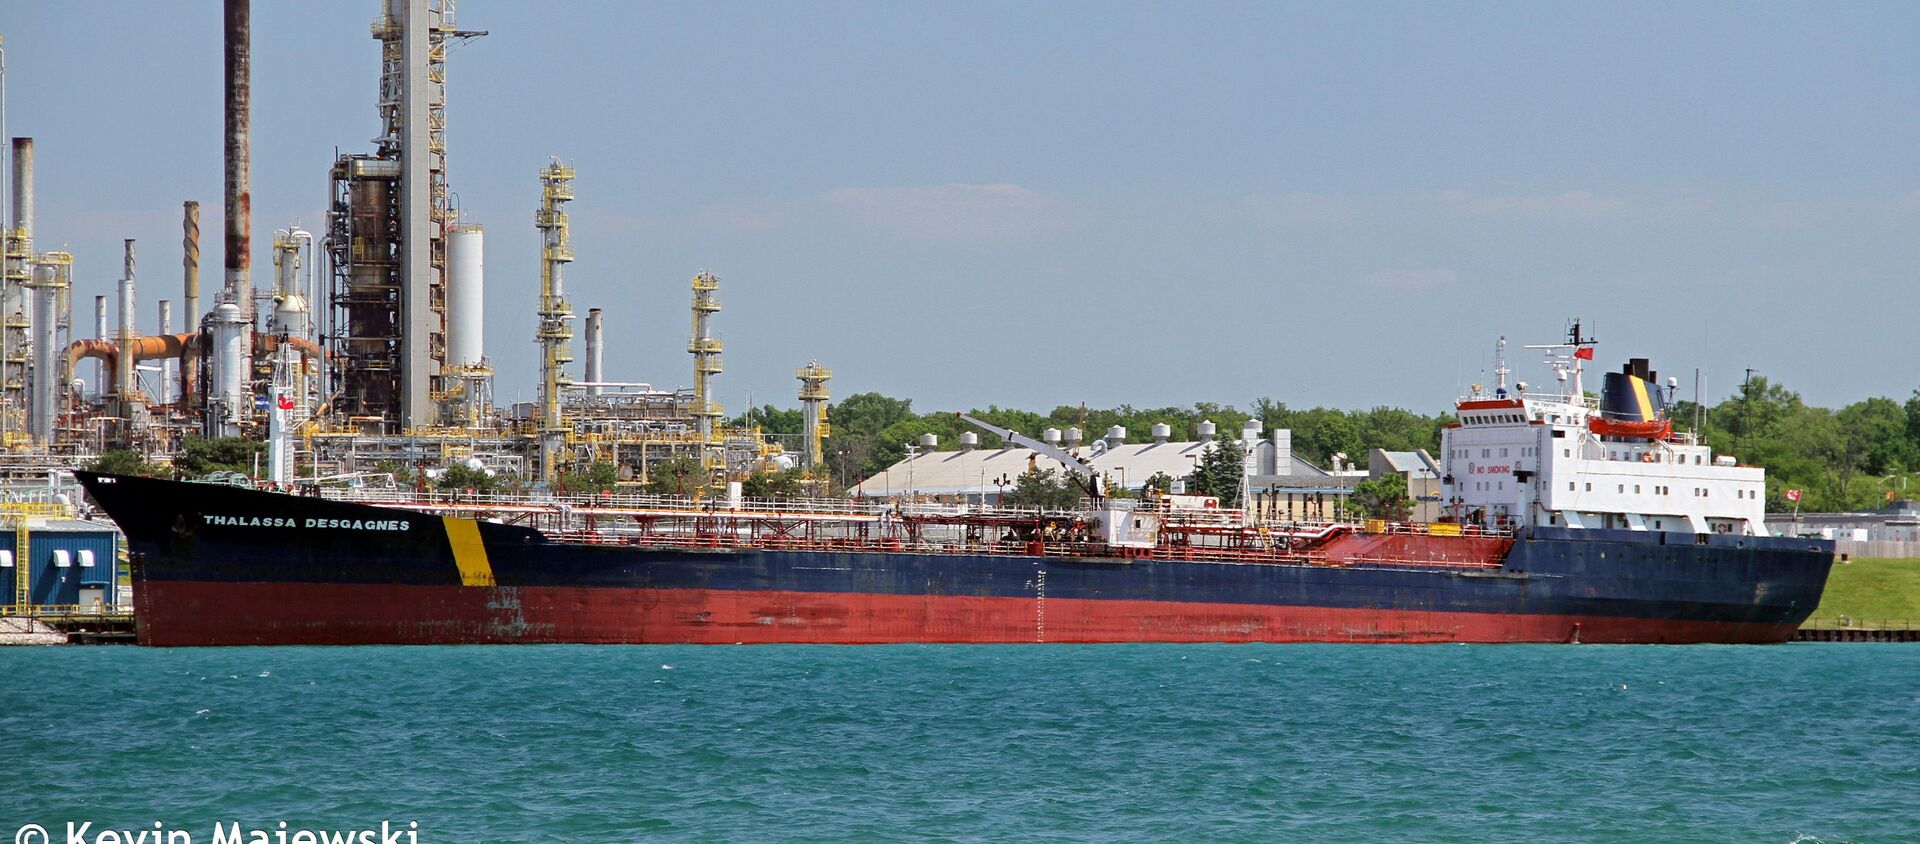 A handout image shows the Thalassa Desgagnes tanker, now called the Asphalt Princess, in Sarnia, Ontario, Canada June 19, 2016. - Sputnik International, 1920, 04.08.2021